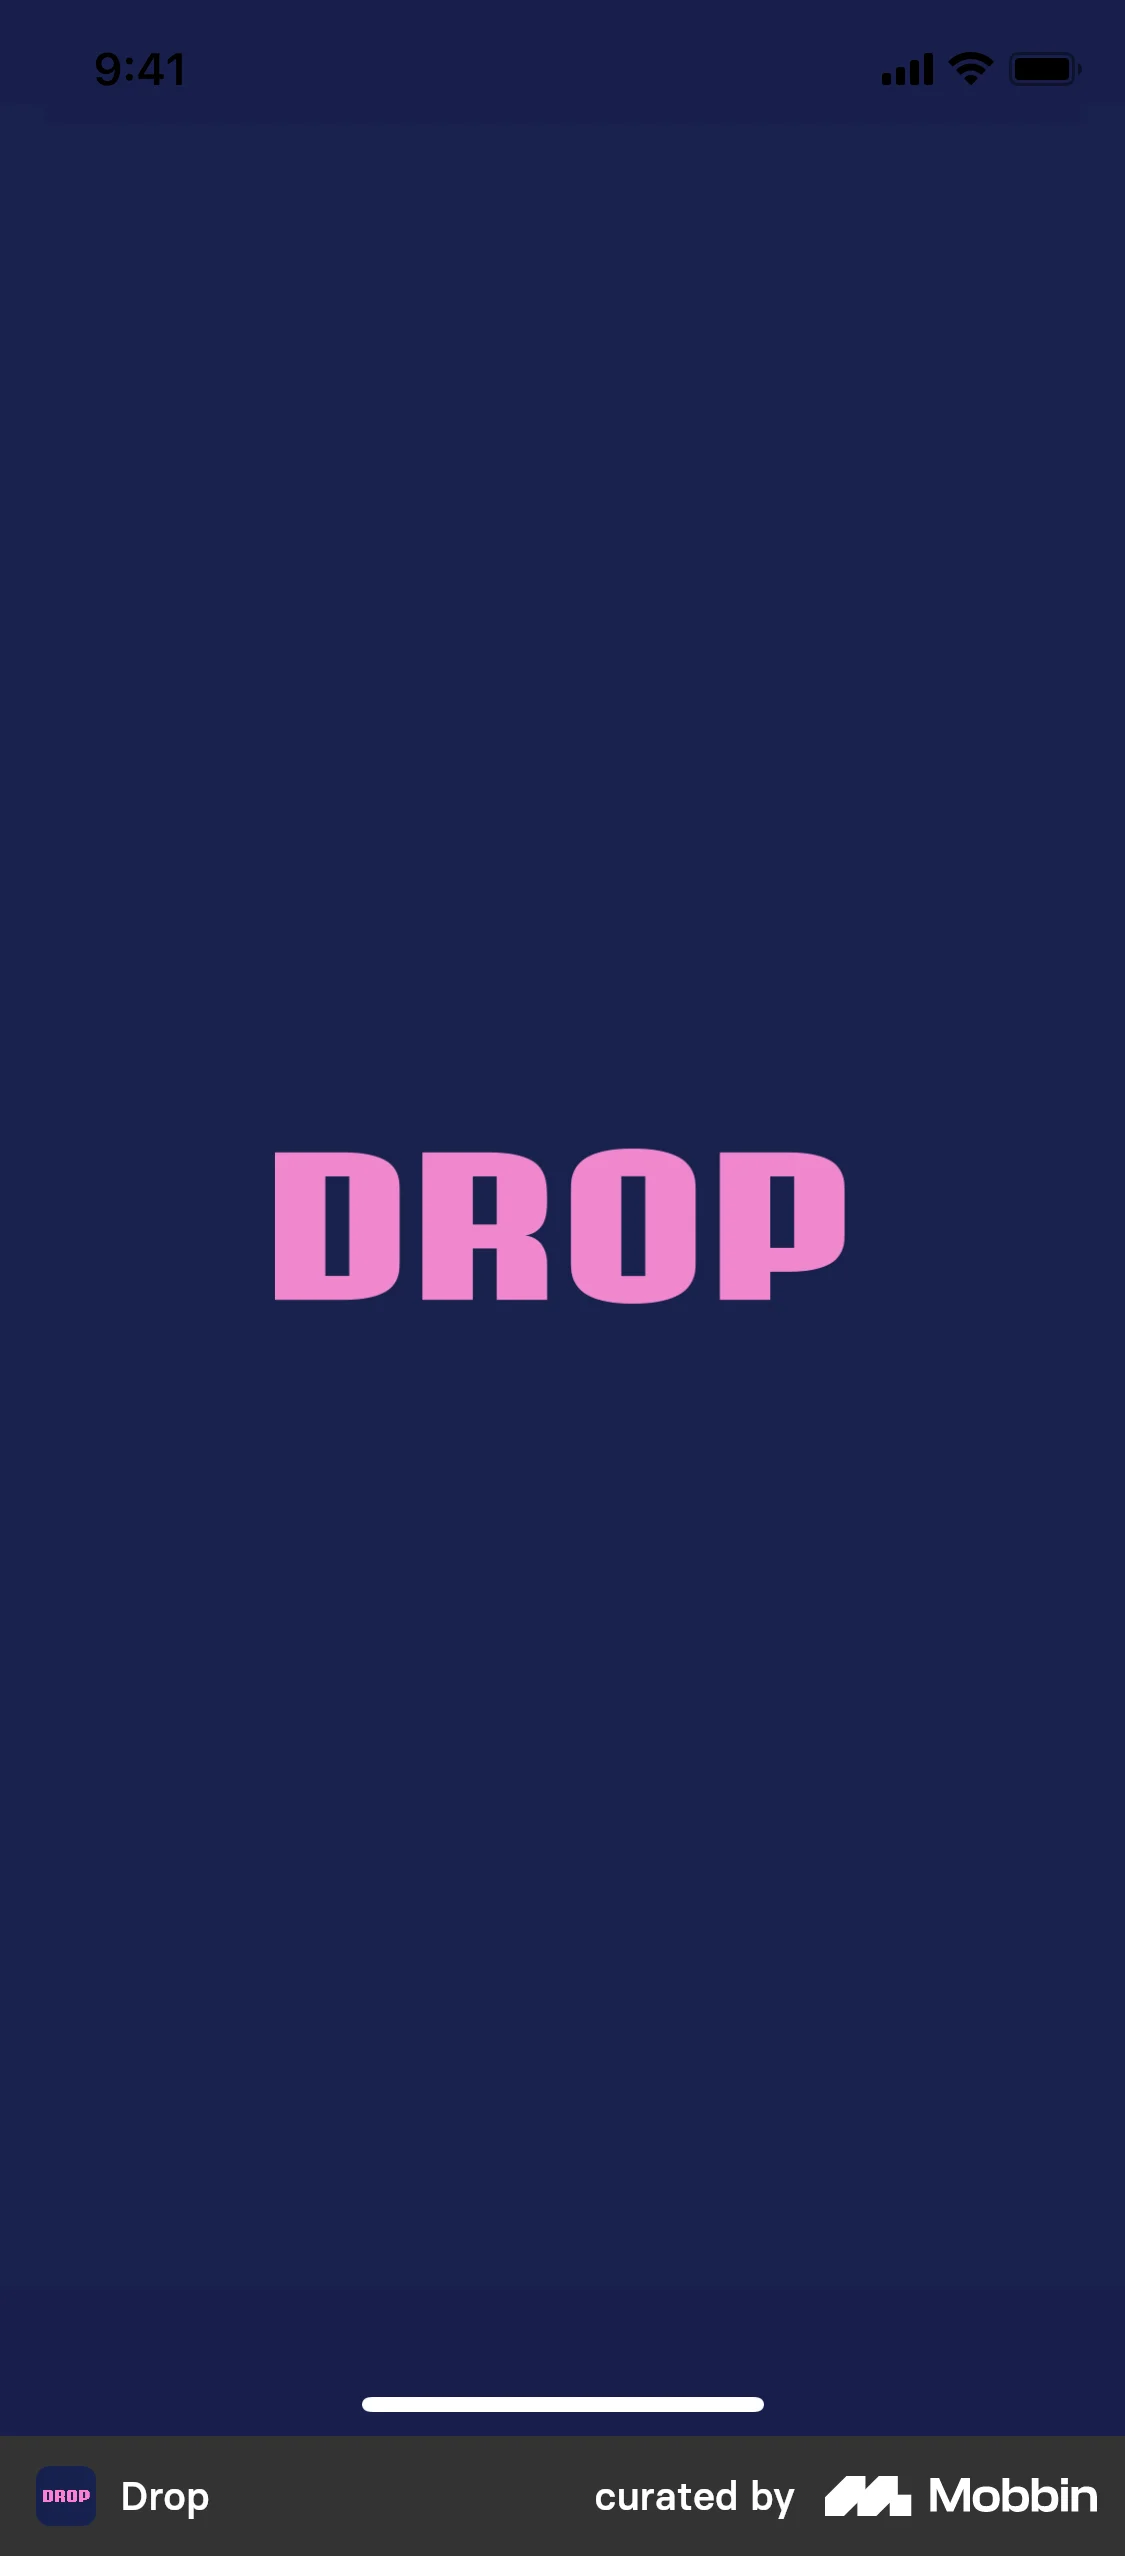 Drop screen